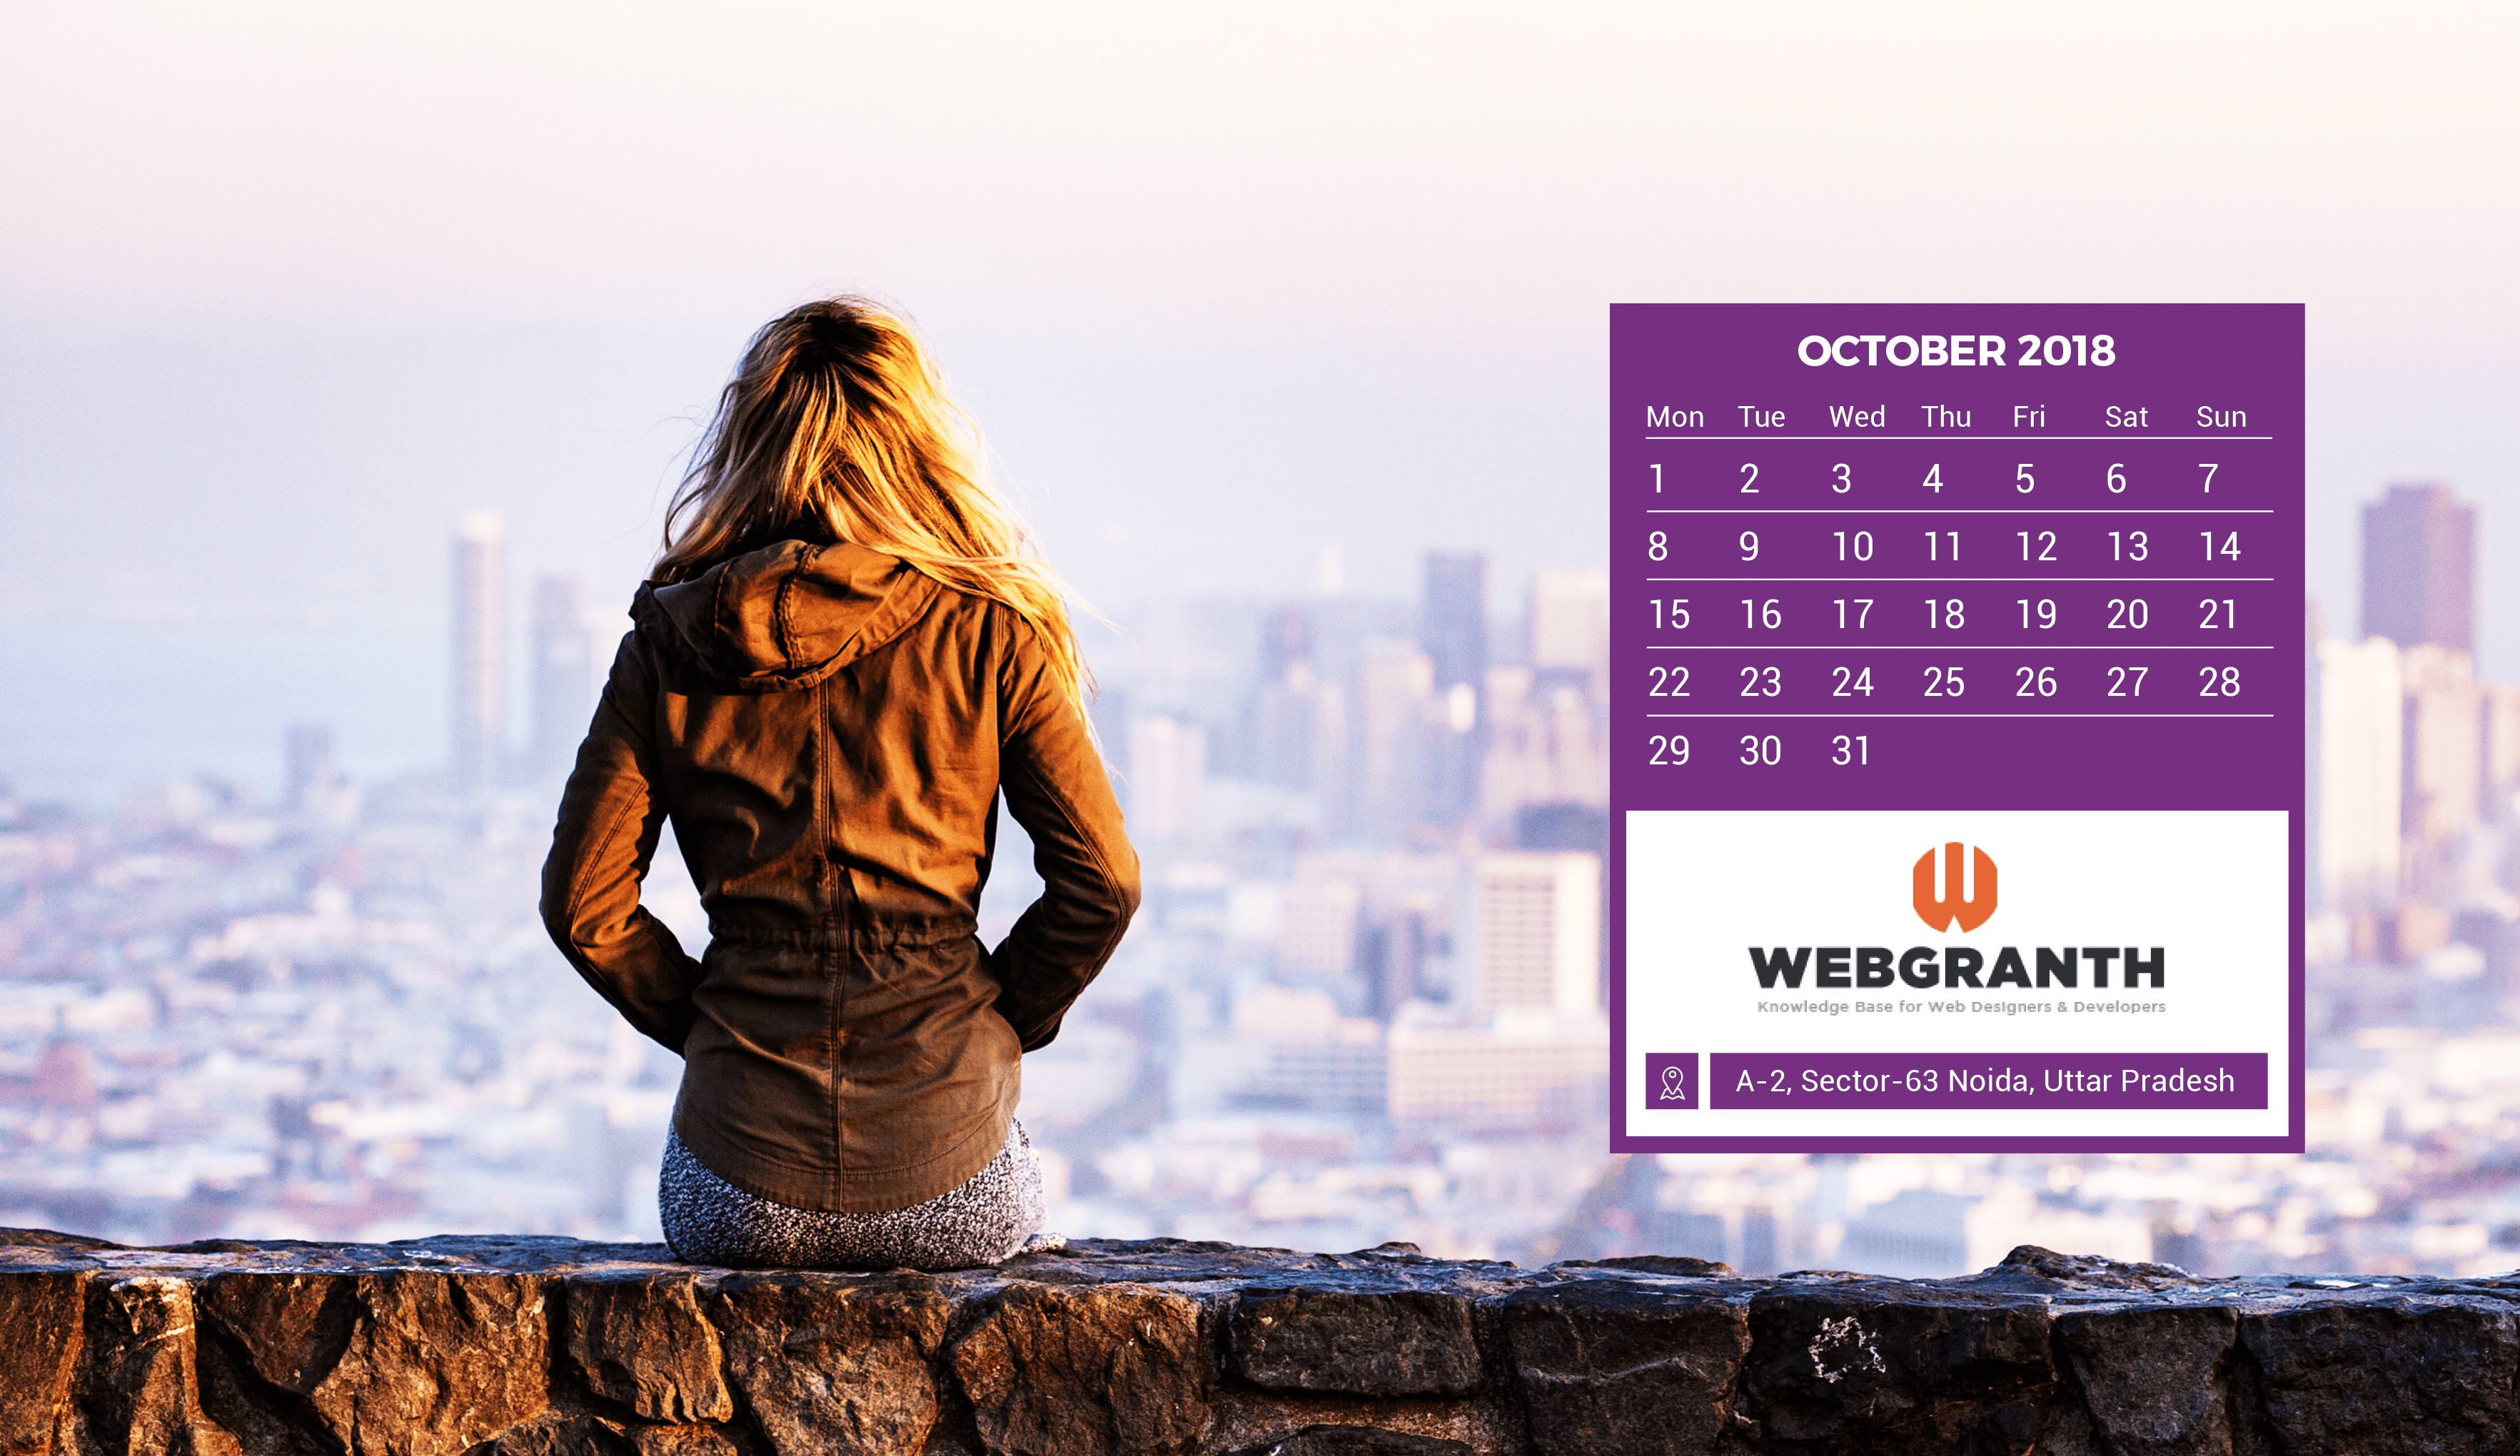 HD October Calendar Wallpaper 2018: View HD Image Of HD October